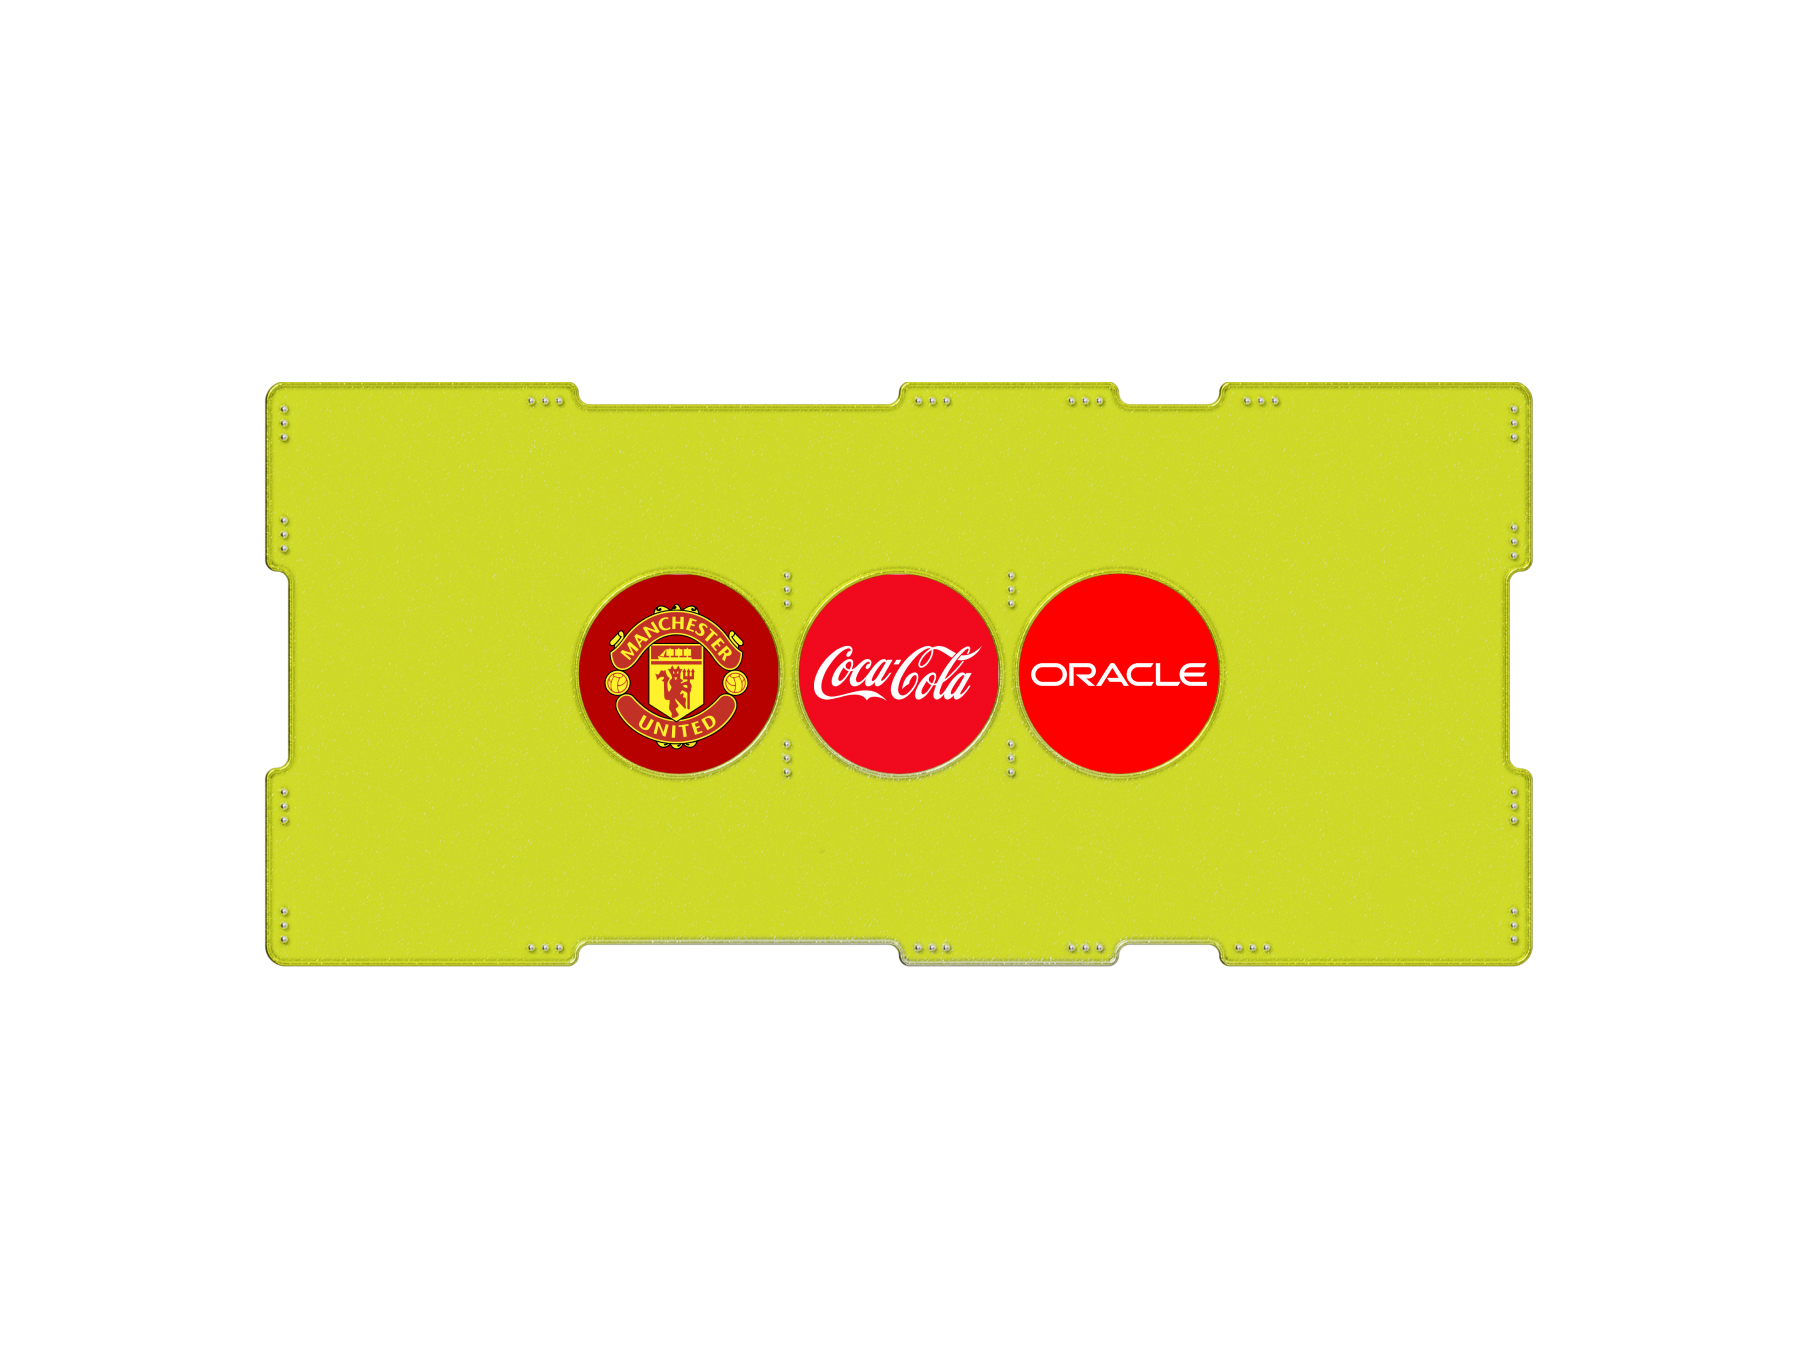 Календарь инвестора: с «Манчестер Юнайтед» — отчет, с «Кока-колы» — дивиденды